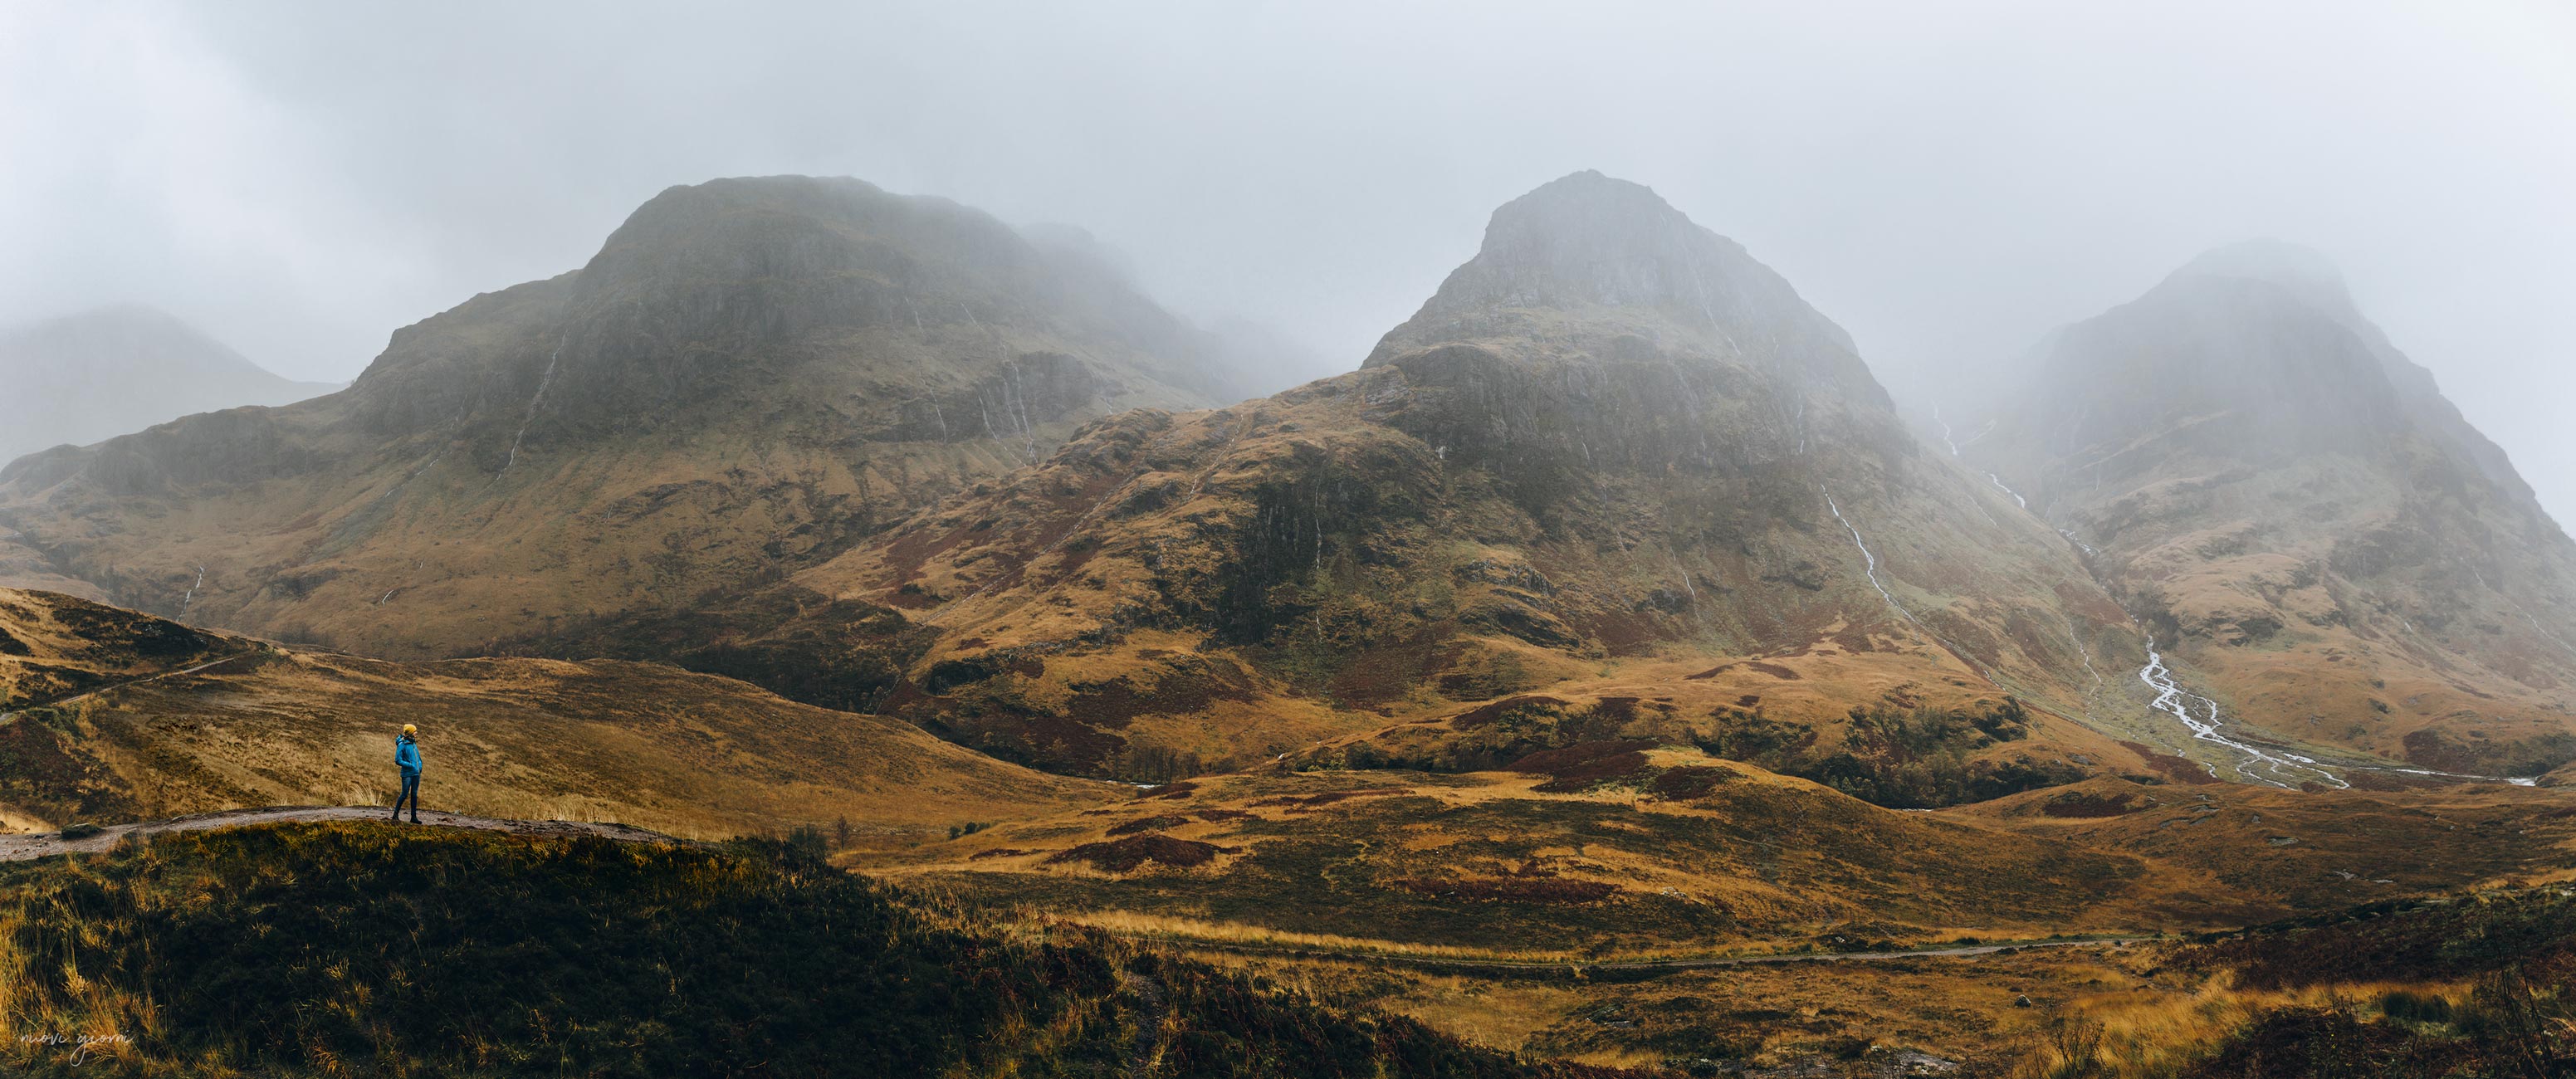 Glencoe scozia Scotland highlands three sisters nuovi giorni blog